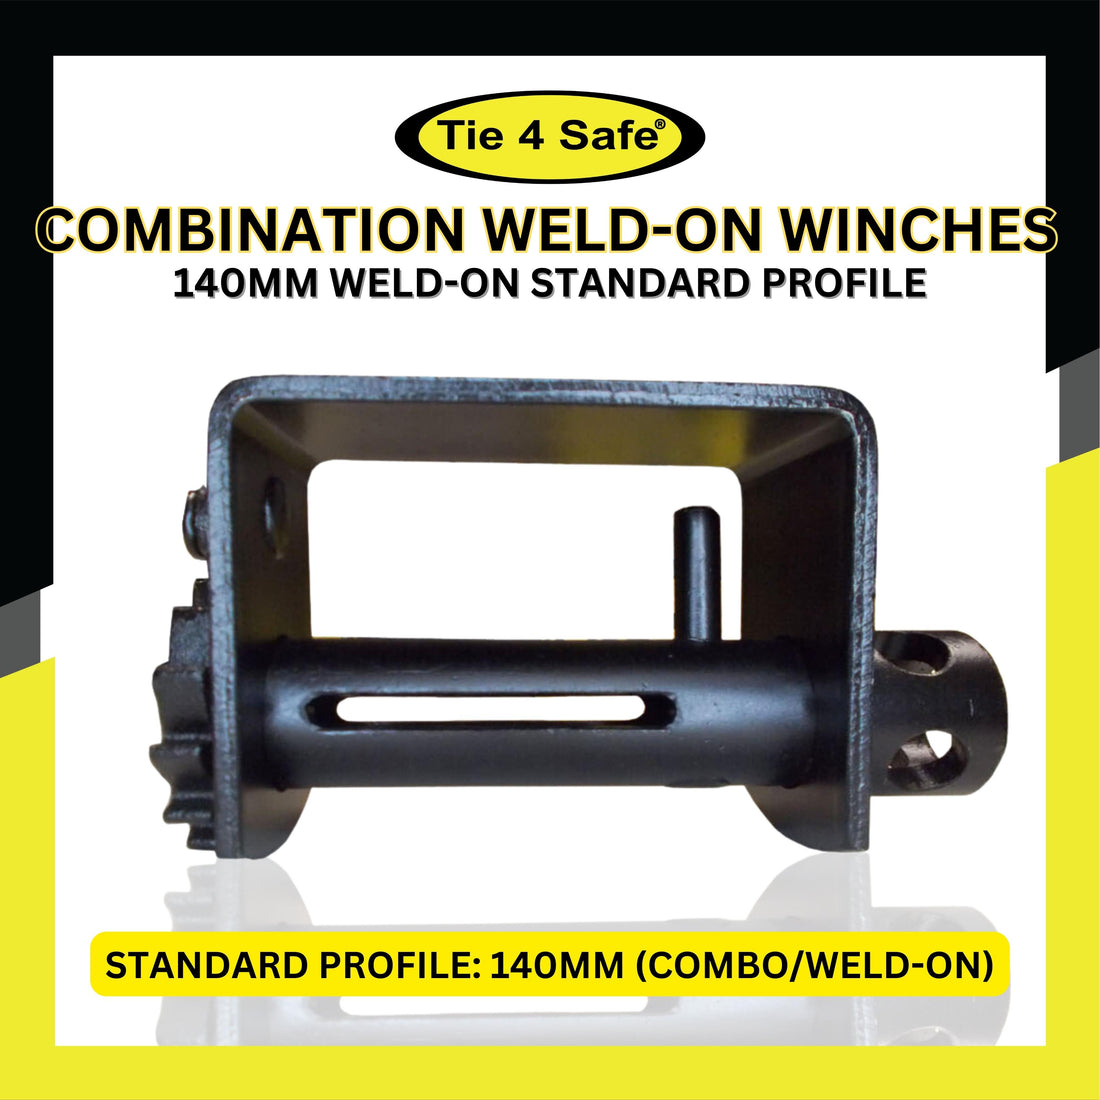 4" Comb. Weld-On Winch, Standard Profile 140 mm